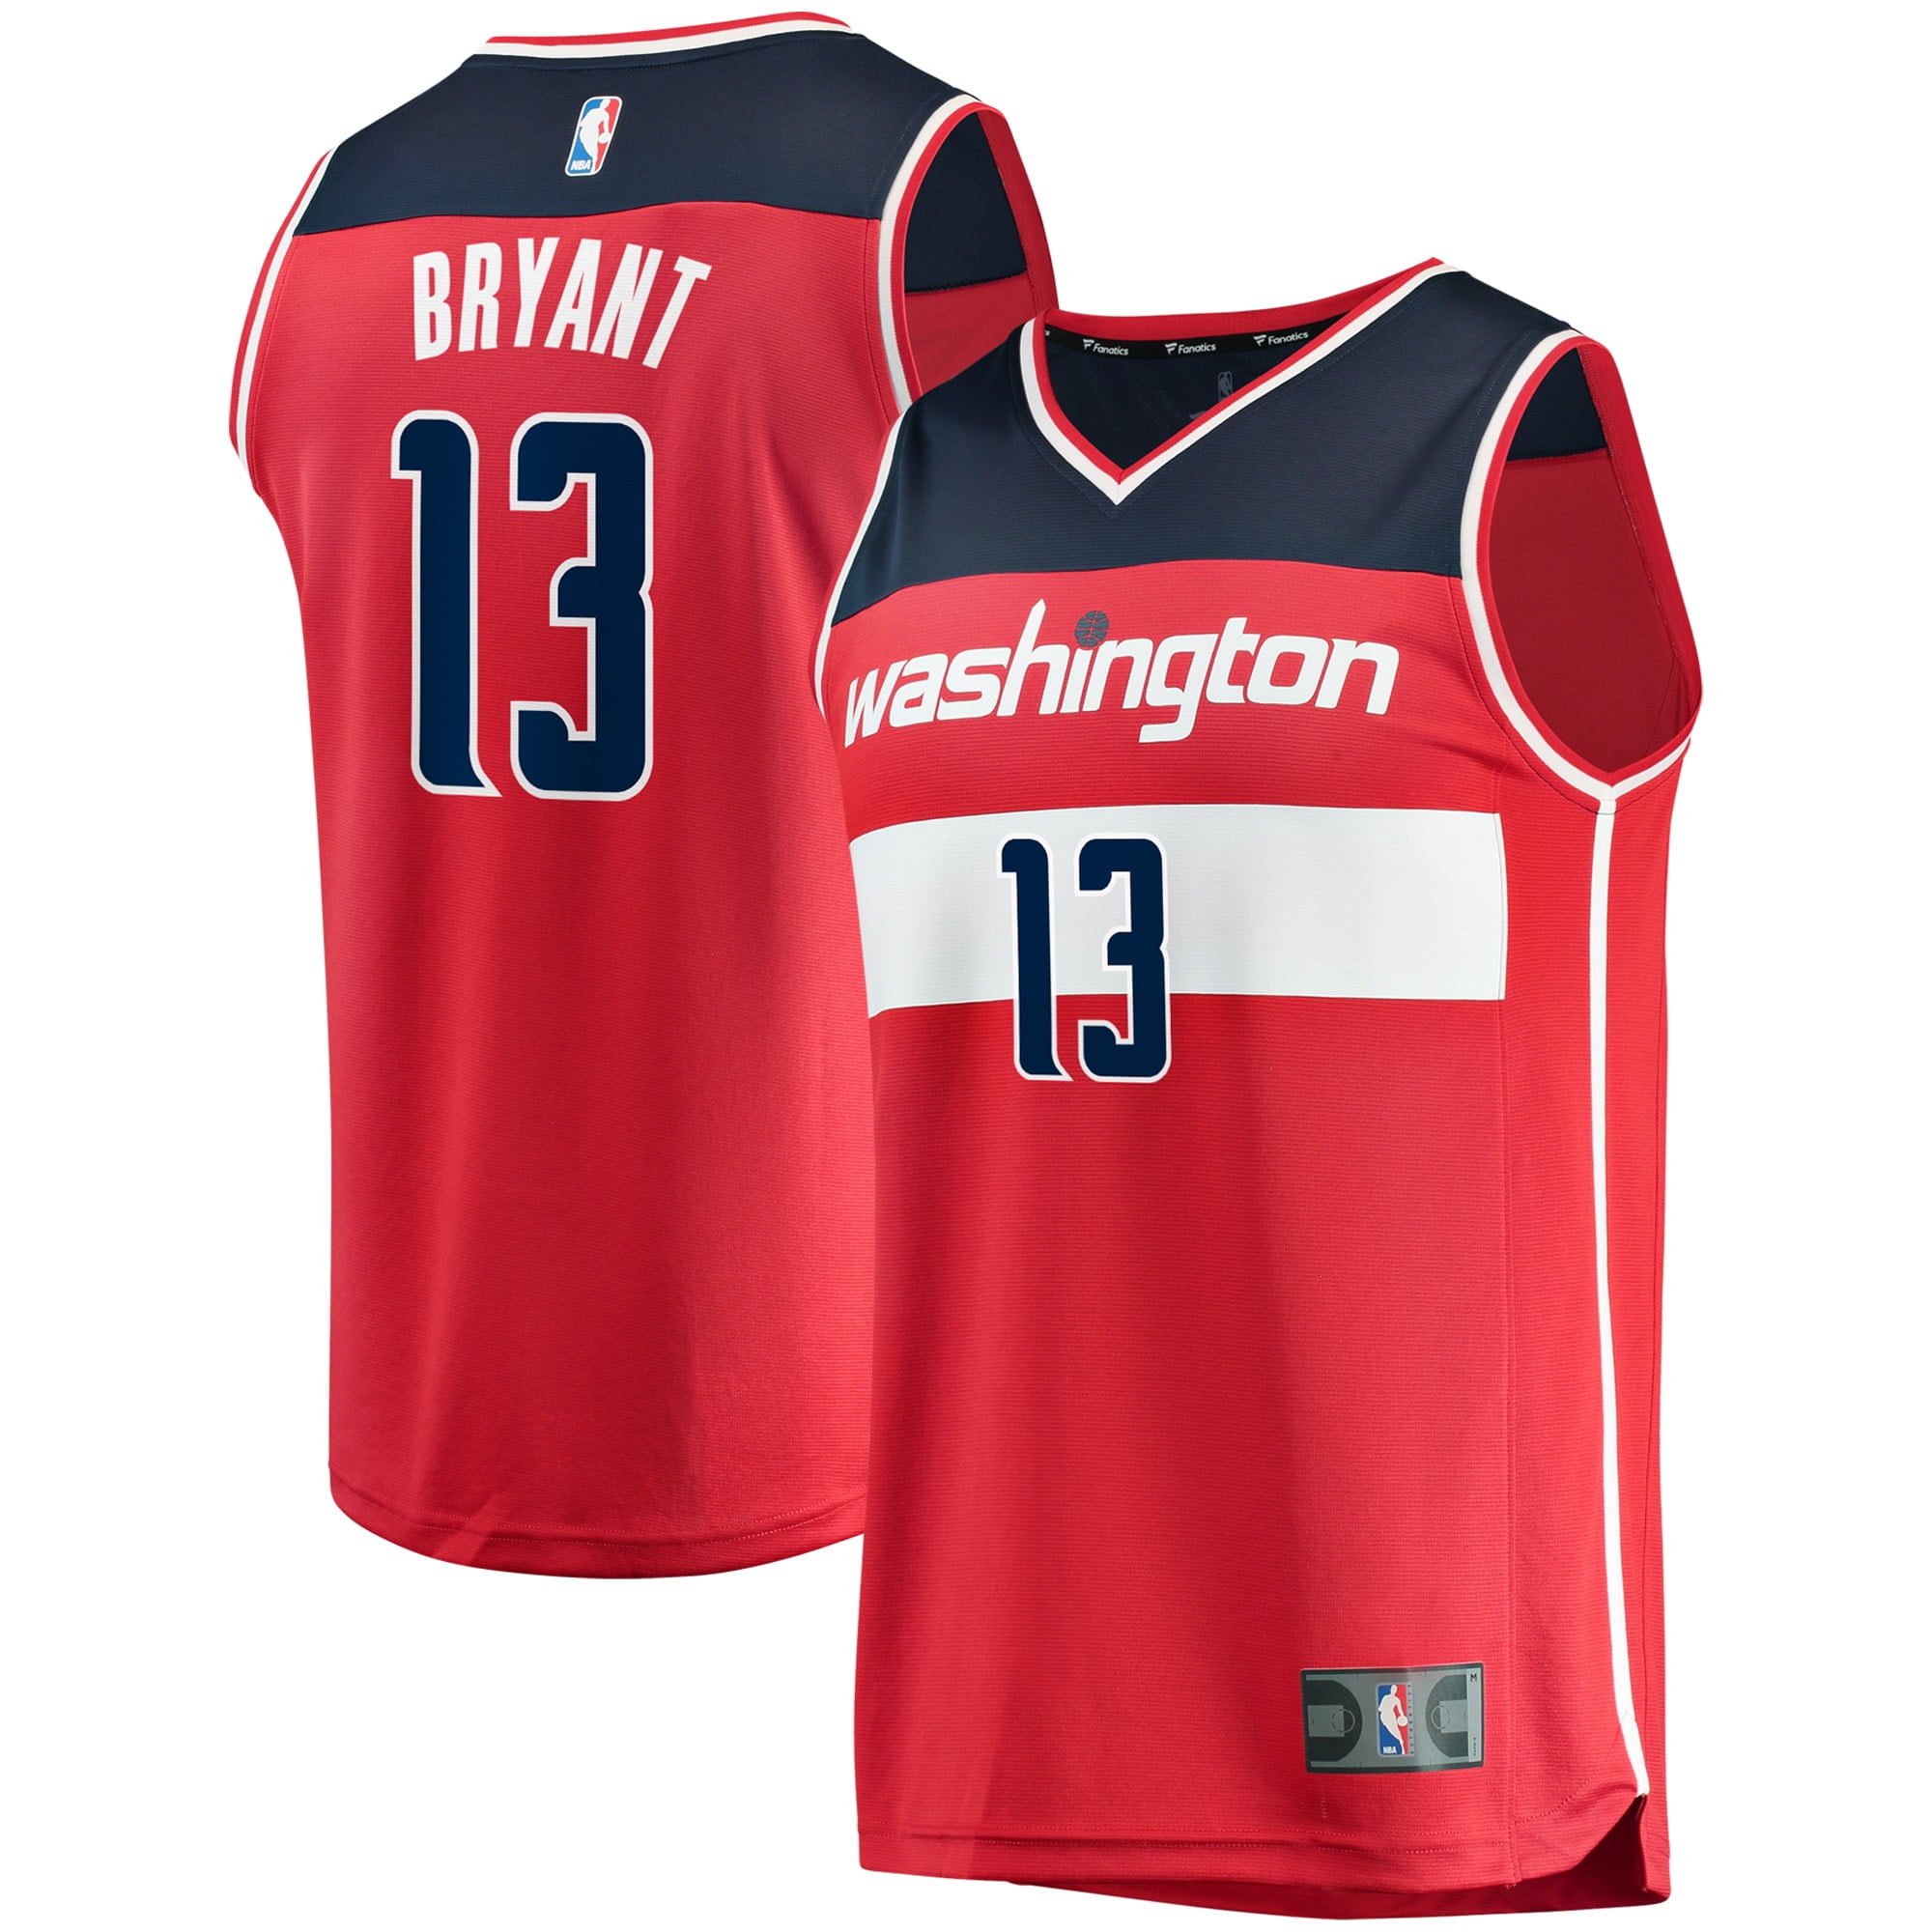 Washington Wizards Fanatics Branded 